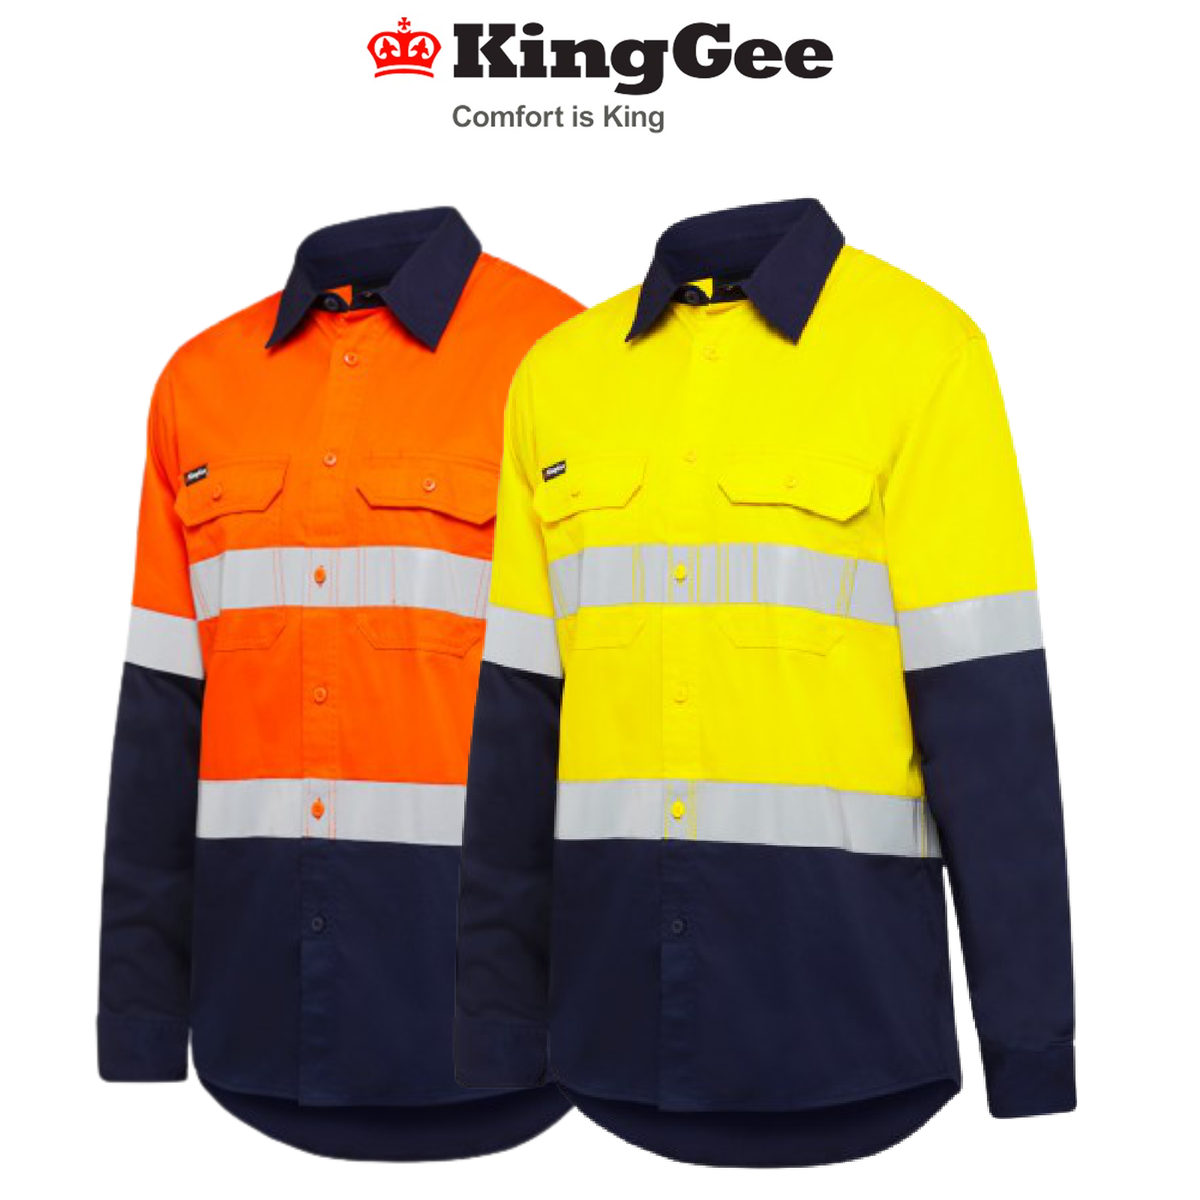 KingGee Mens Stretch Spliced Shirt Hi-Vis Tape Reflective Work Safety K04050